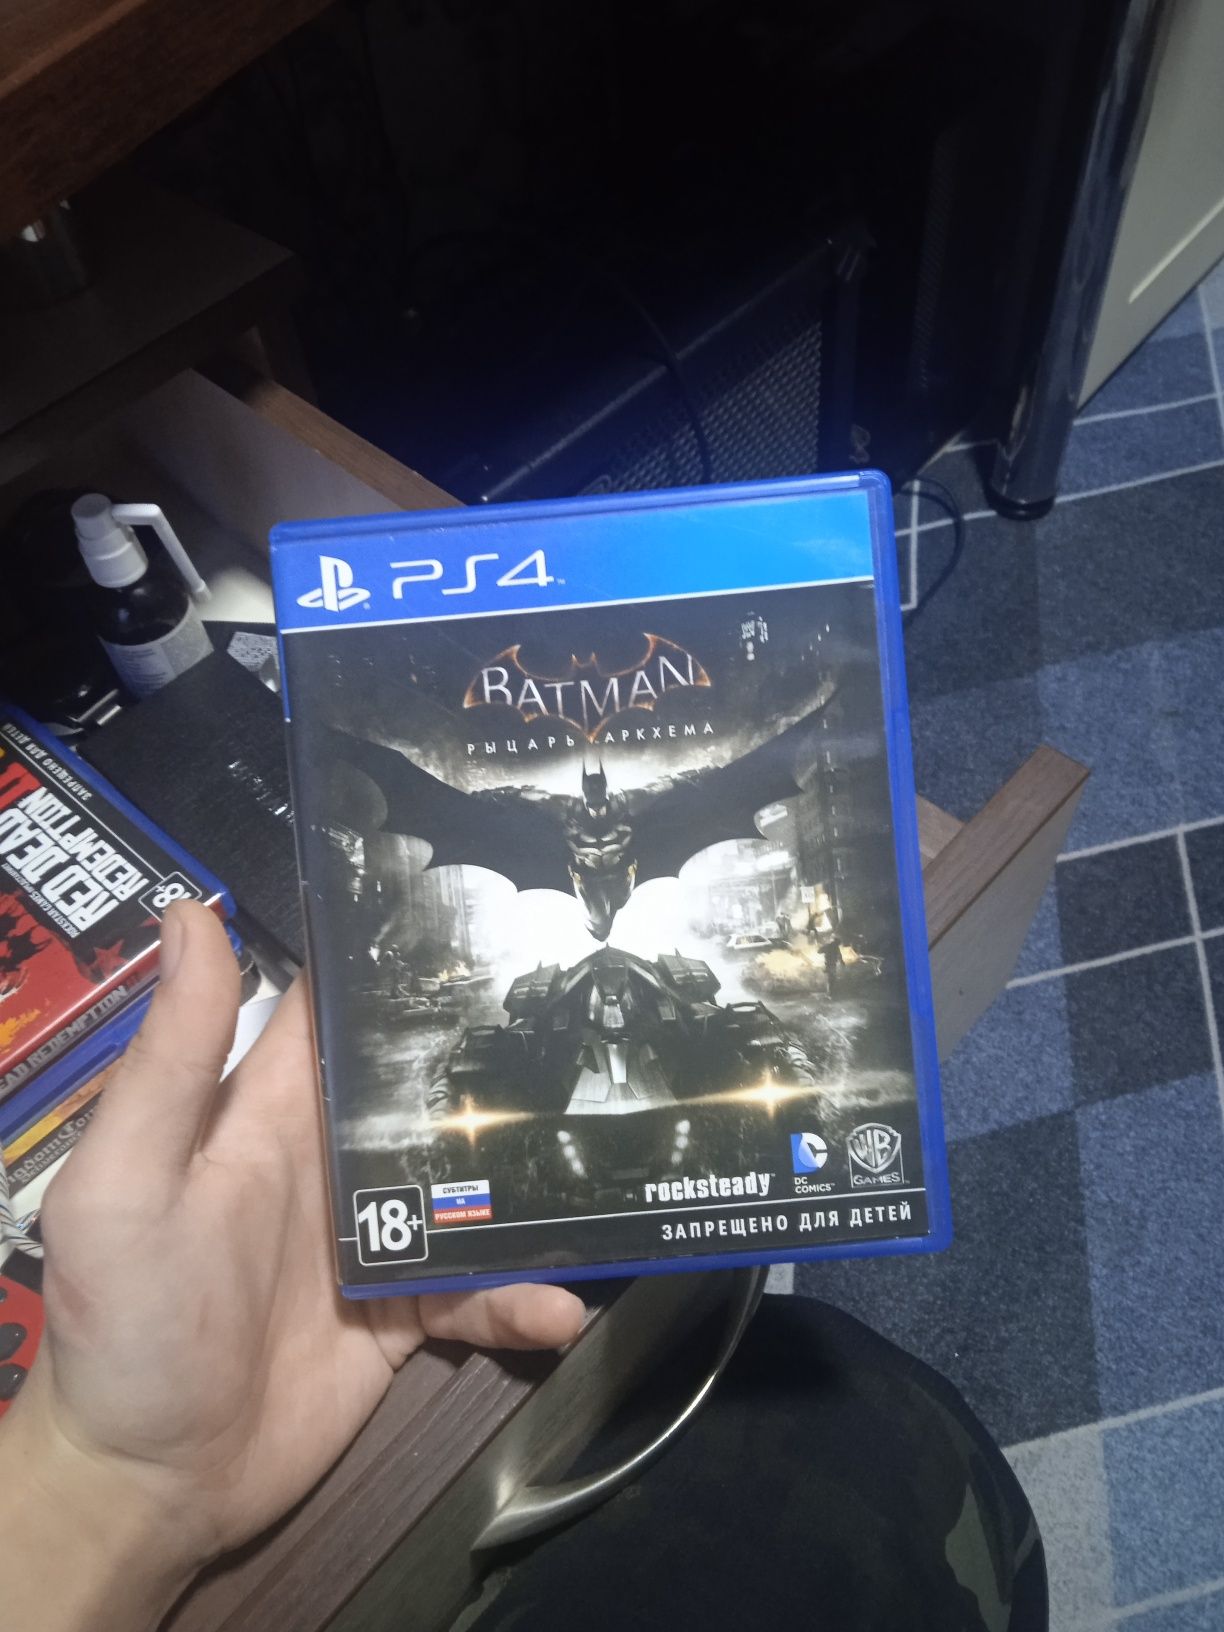 Продам Диск PS4:Batman Knight of Arkham